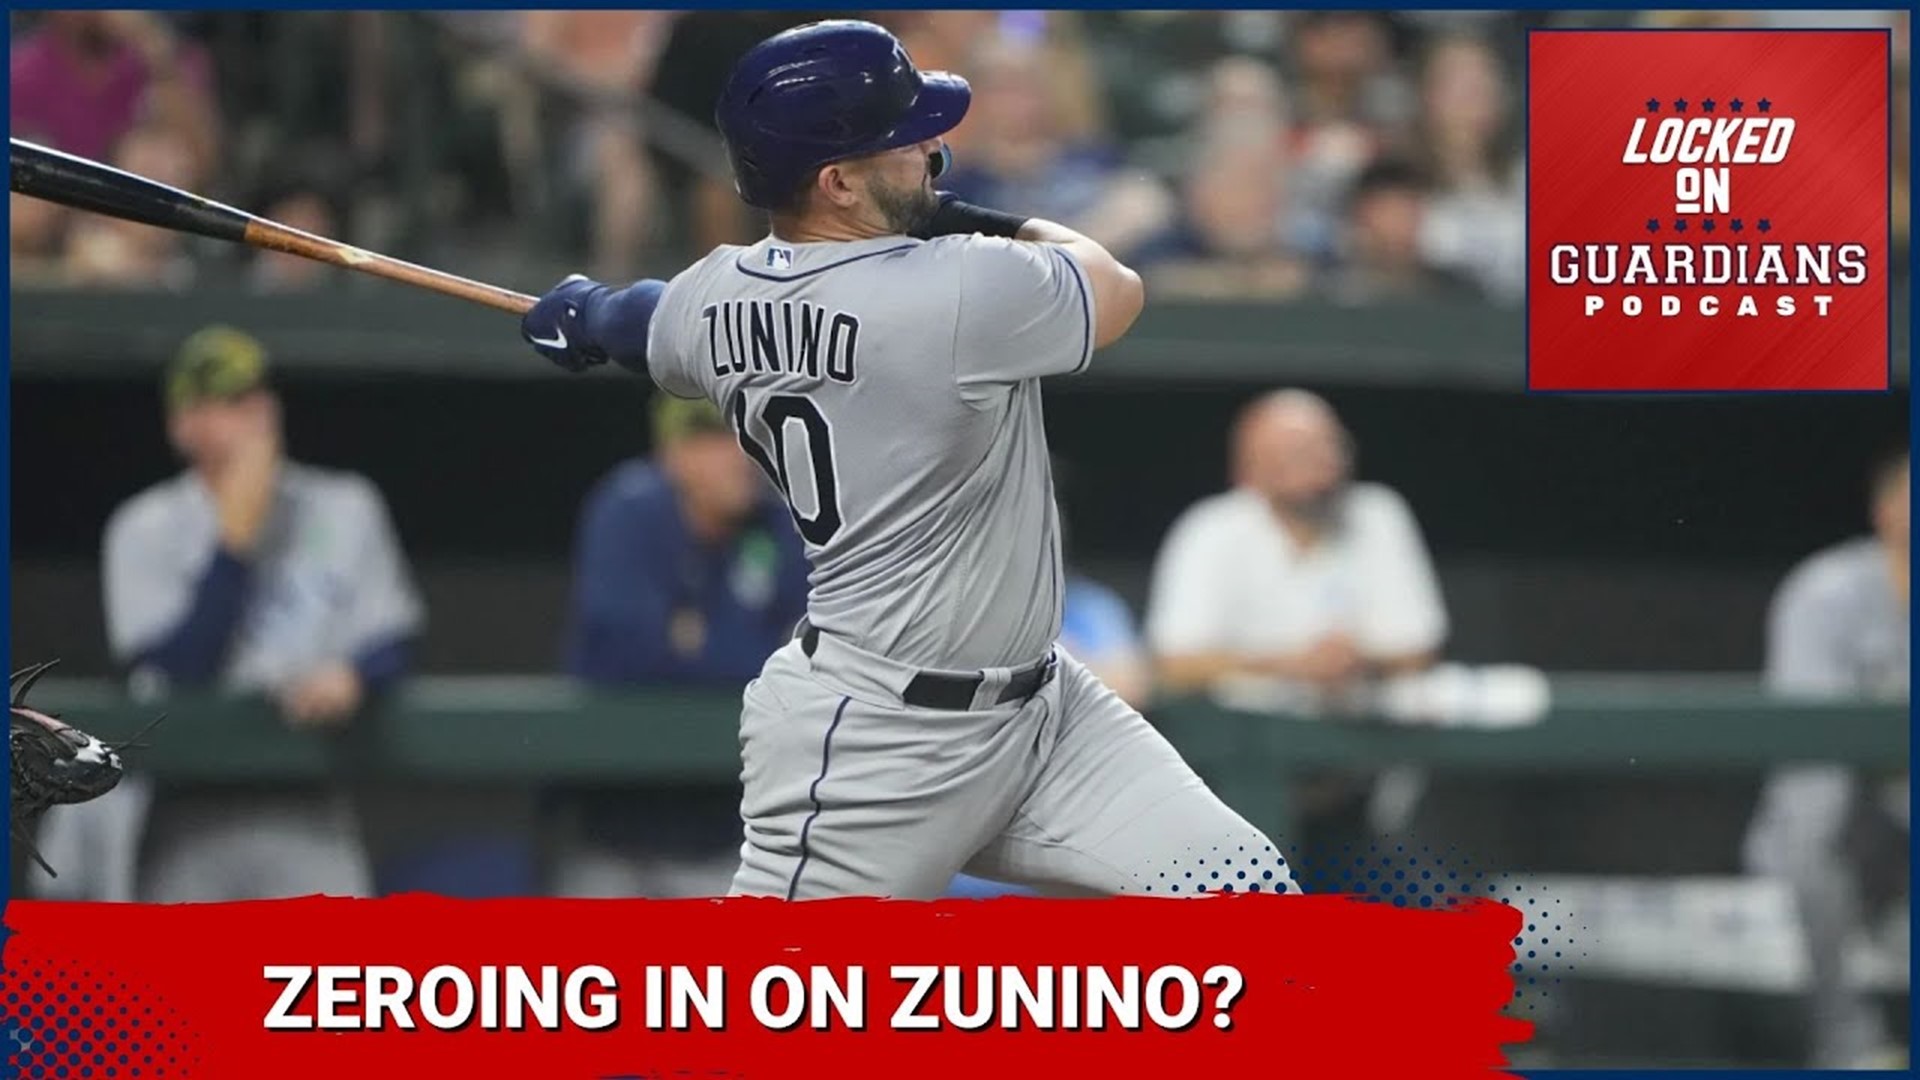 Mike Zunino - Cleveland Guardians Catcher - ESPN